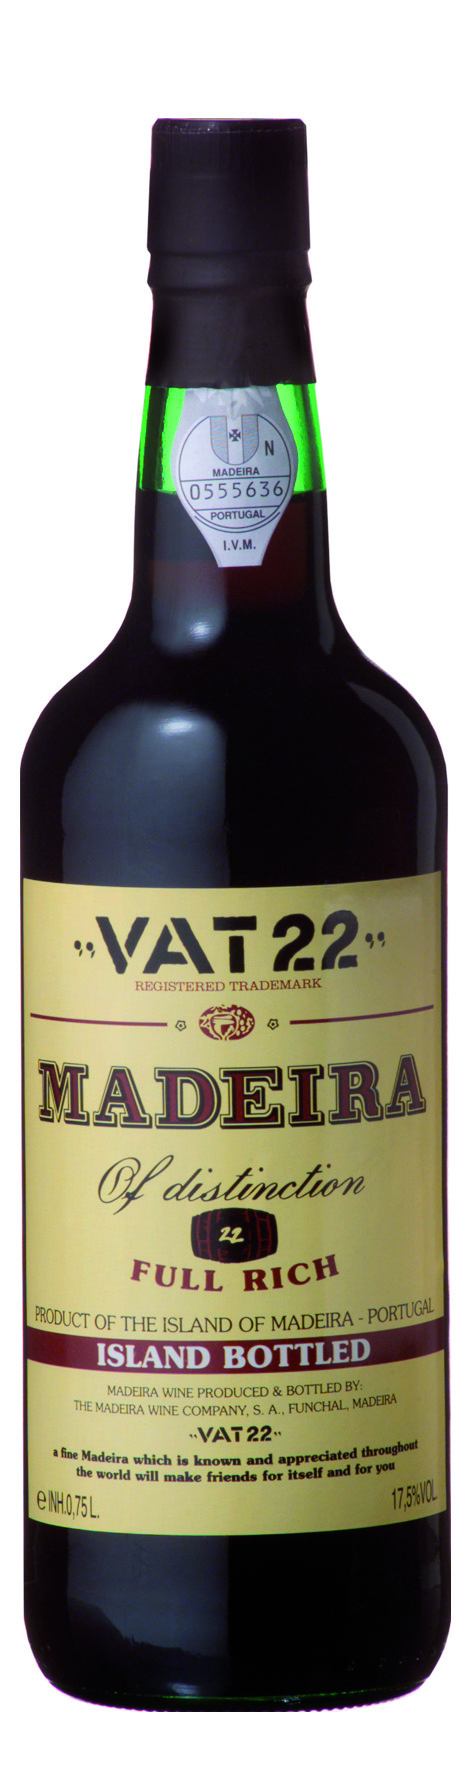 Koe het laatste verdediging Madeira Vat 22 - Island Bottled kopen? - Wijnenwereld.nl